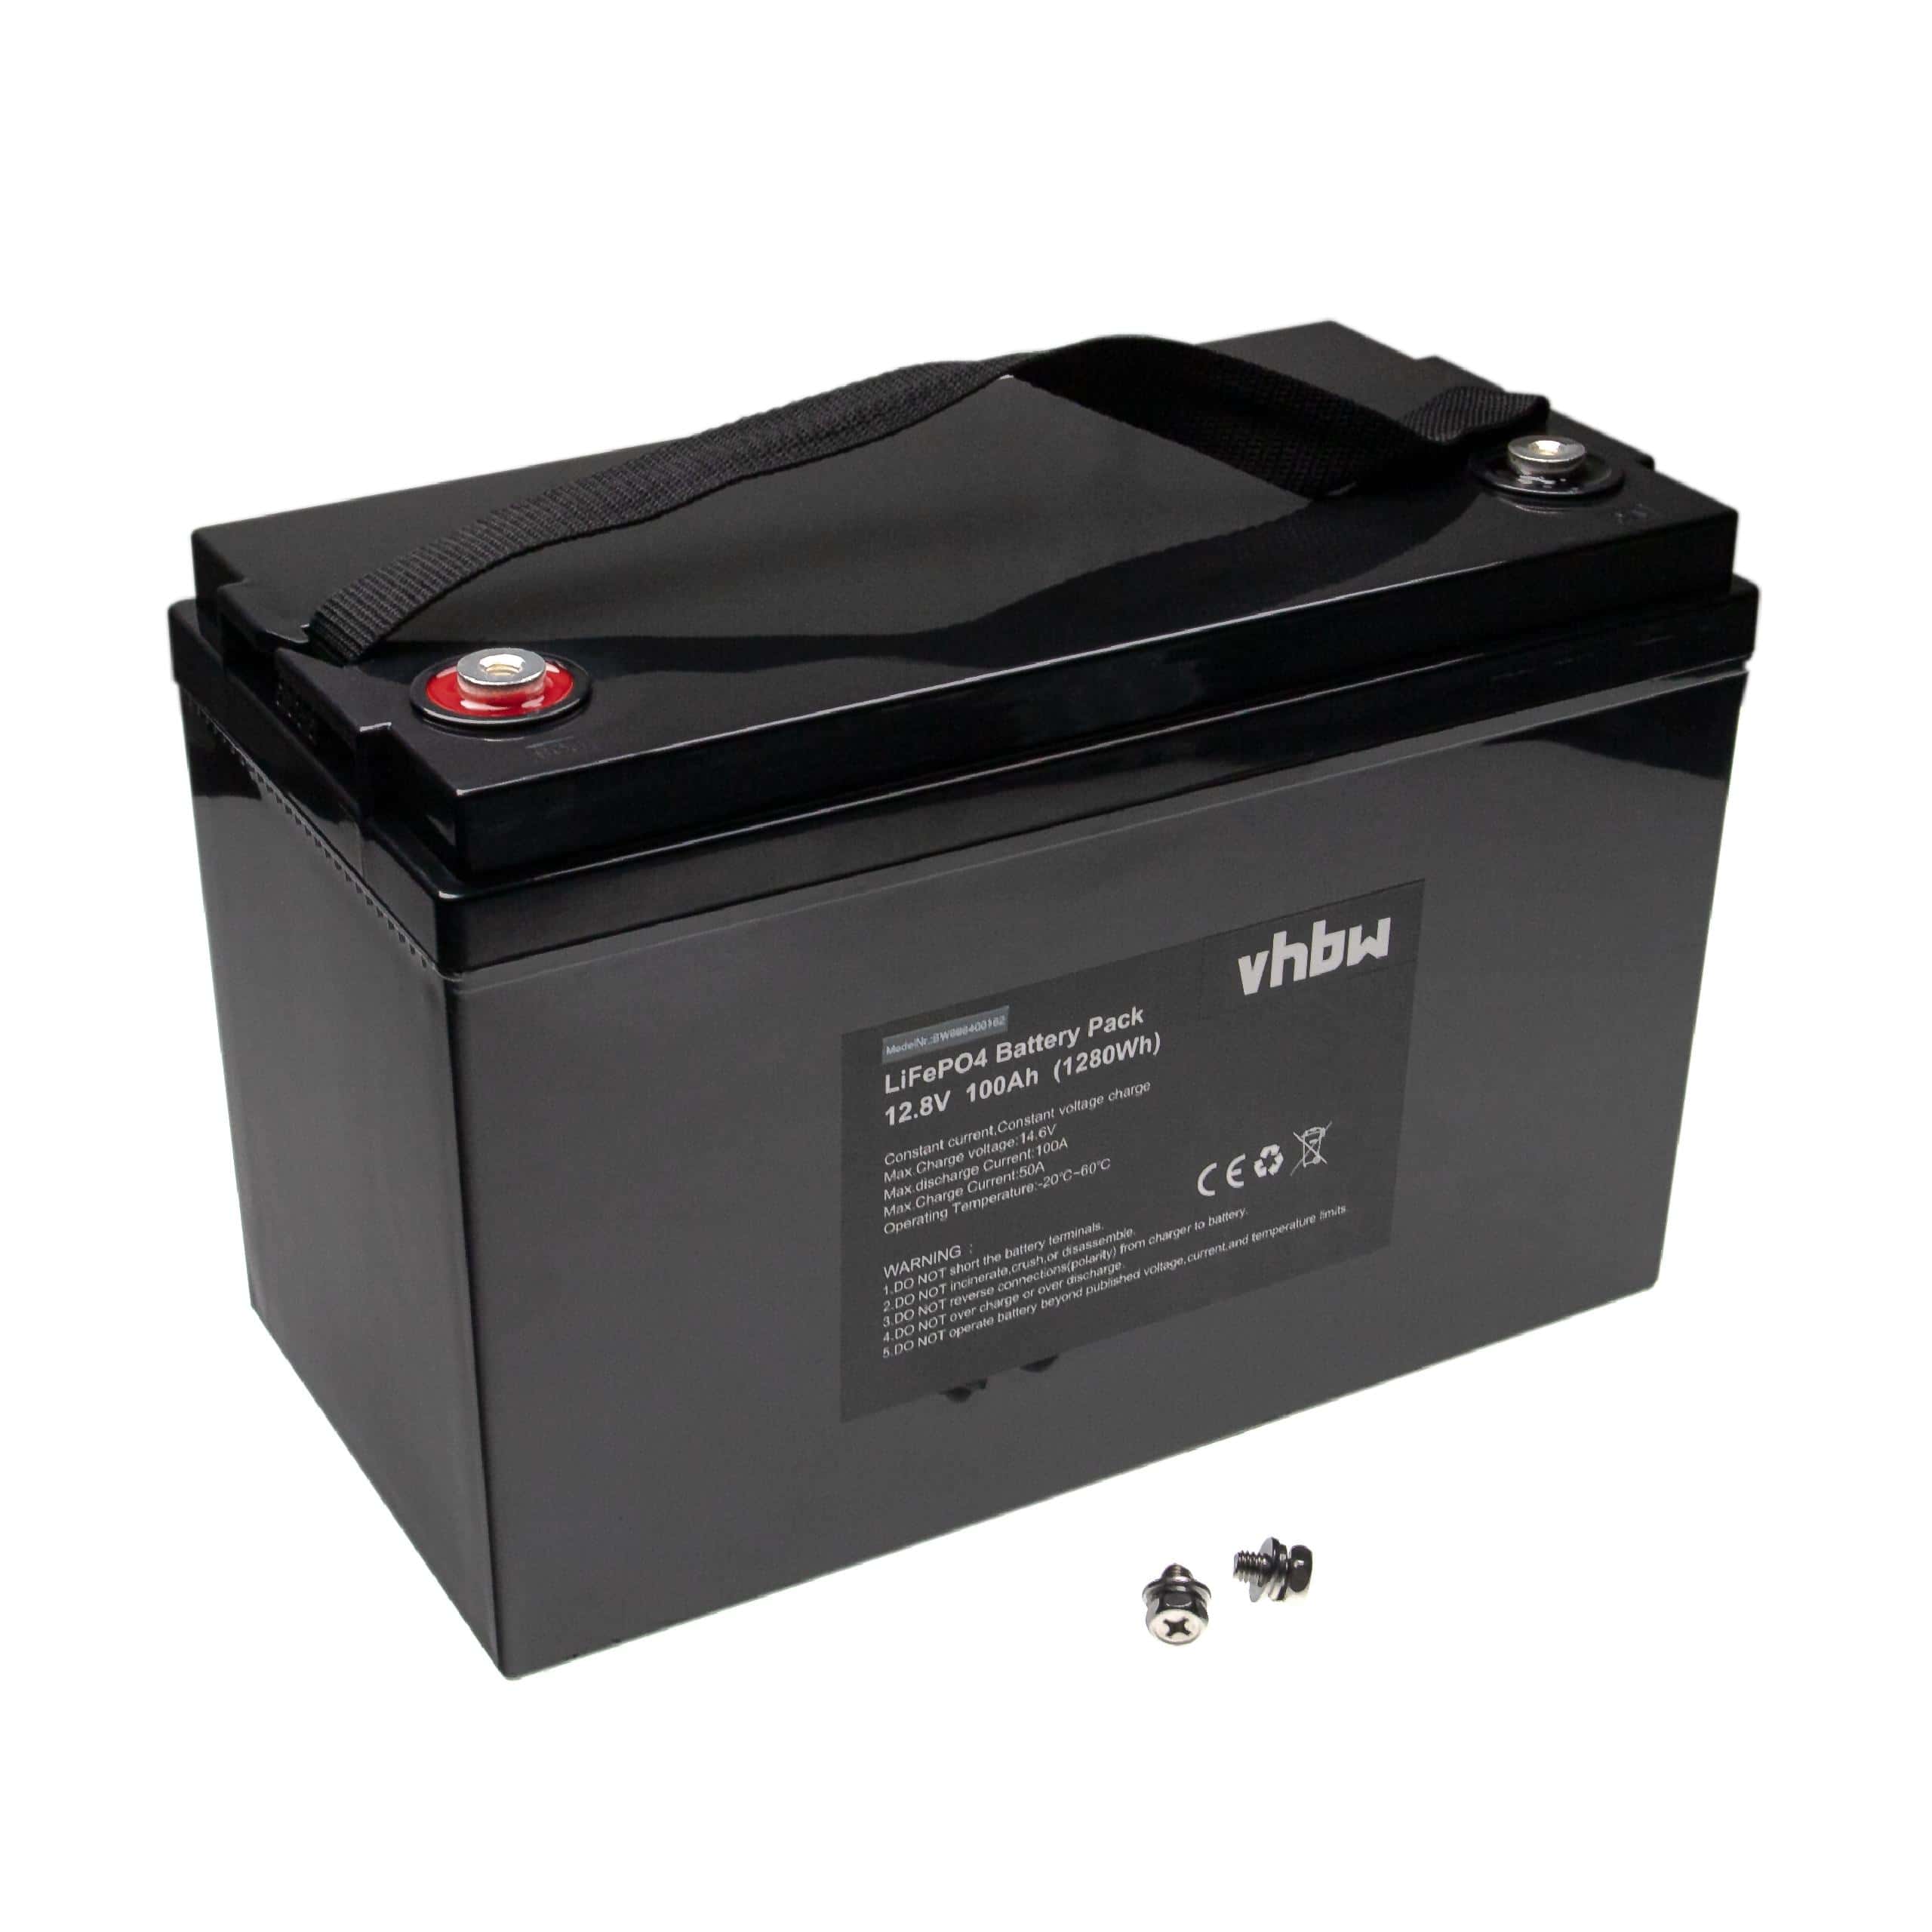 Bordbatterie Akku passend für Wohnmobil, Boot, Solaranlage - 100 Ah 12,8V LiFePO4, 100000mAh, schwarz